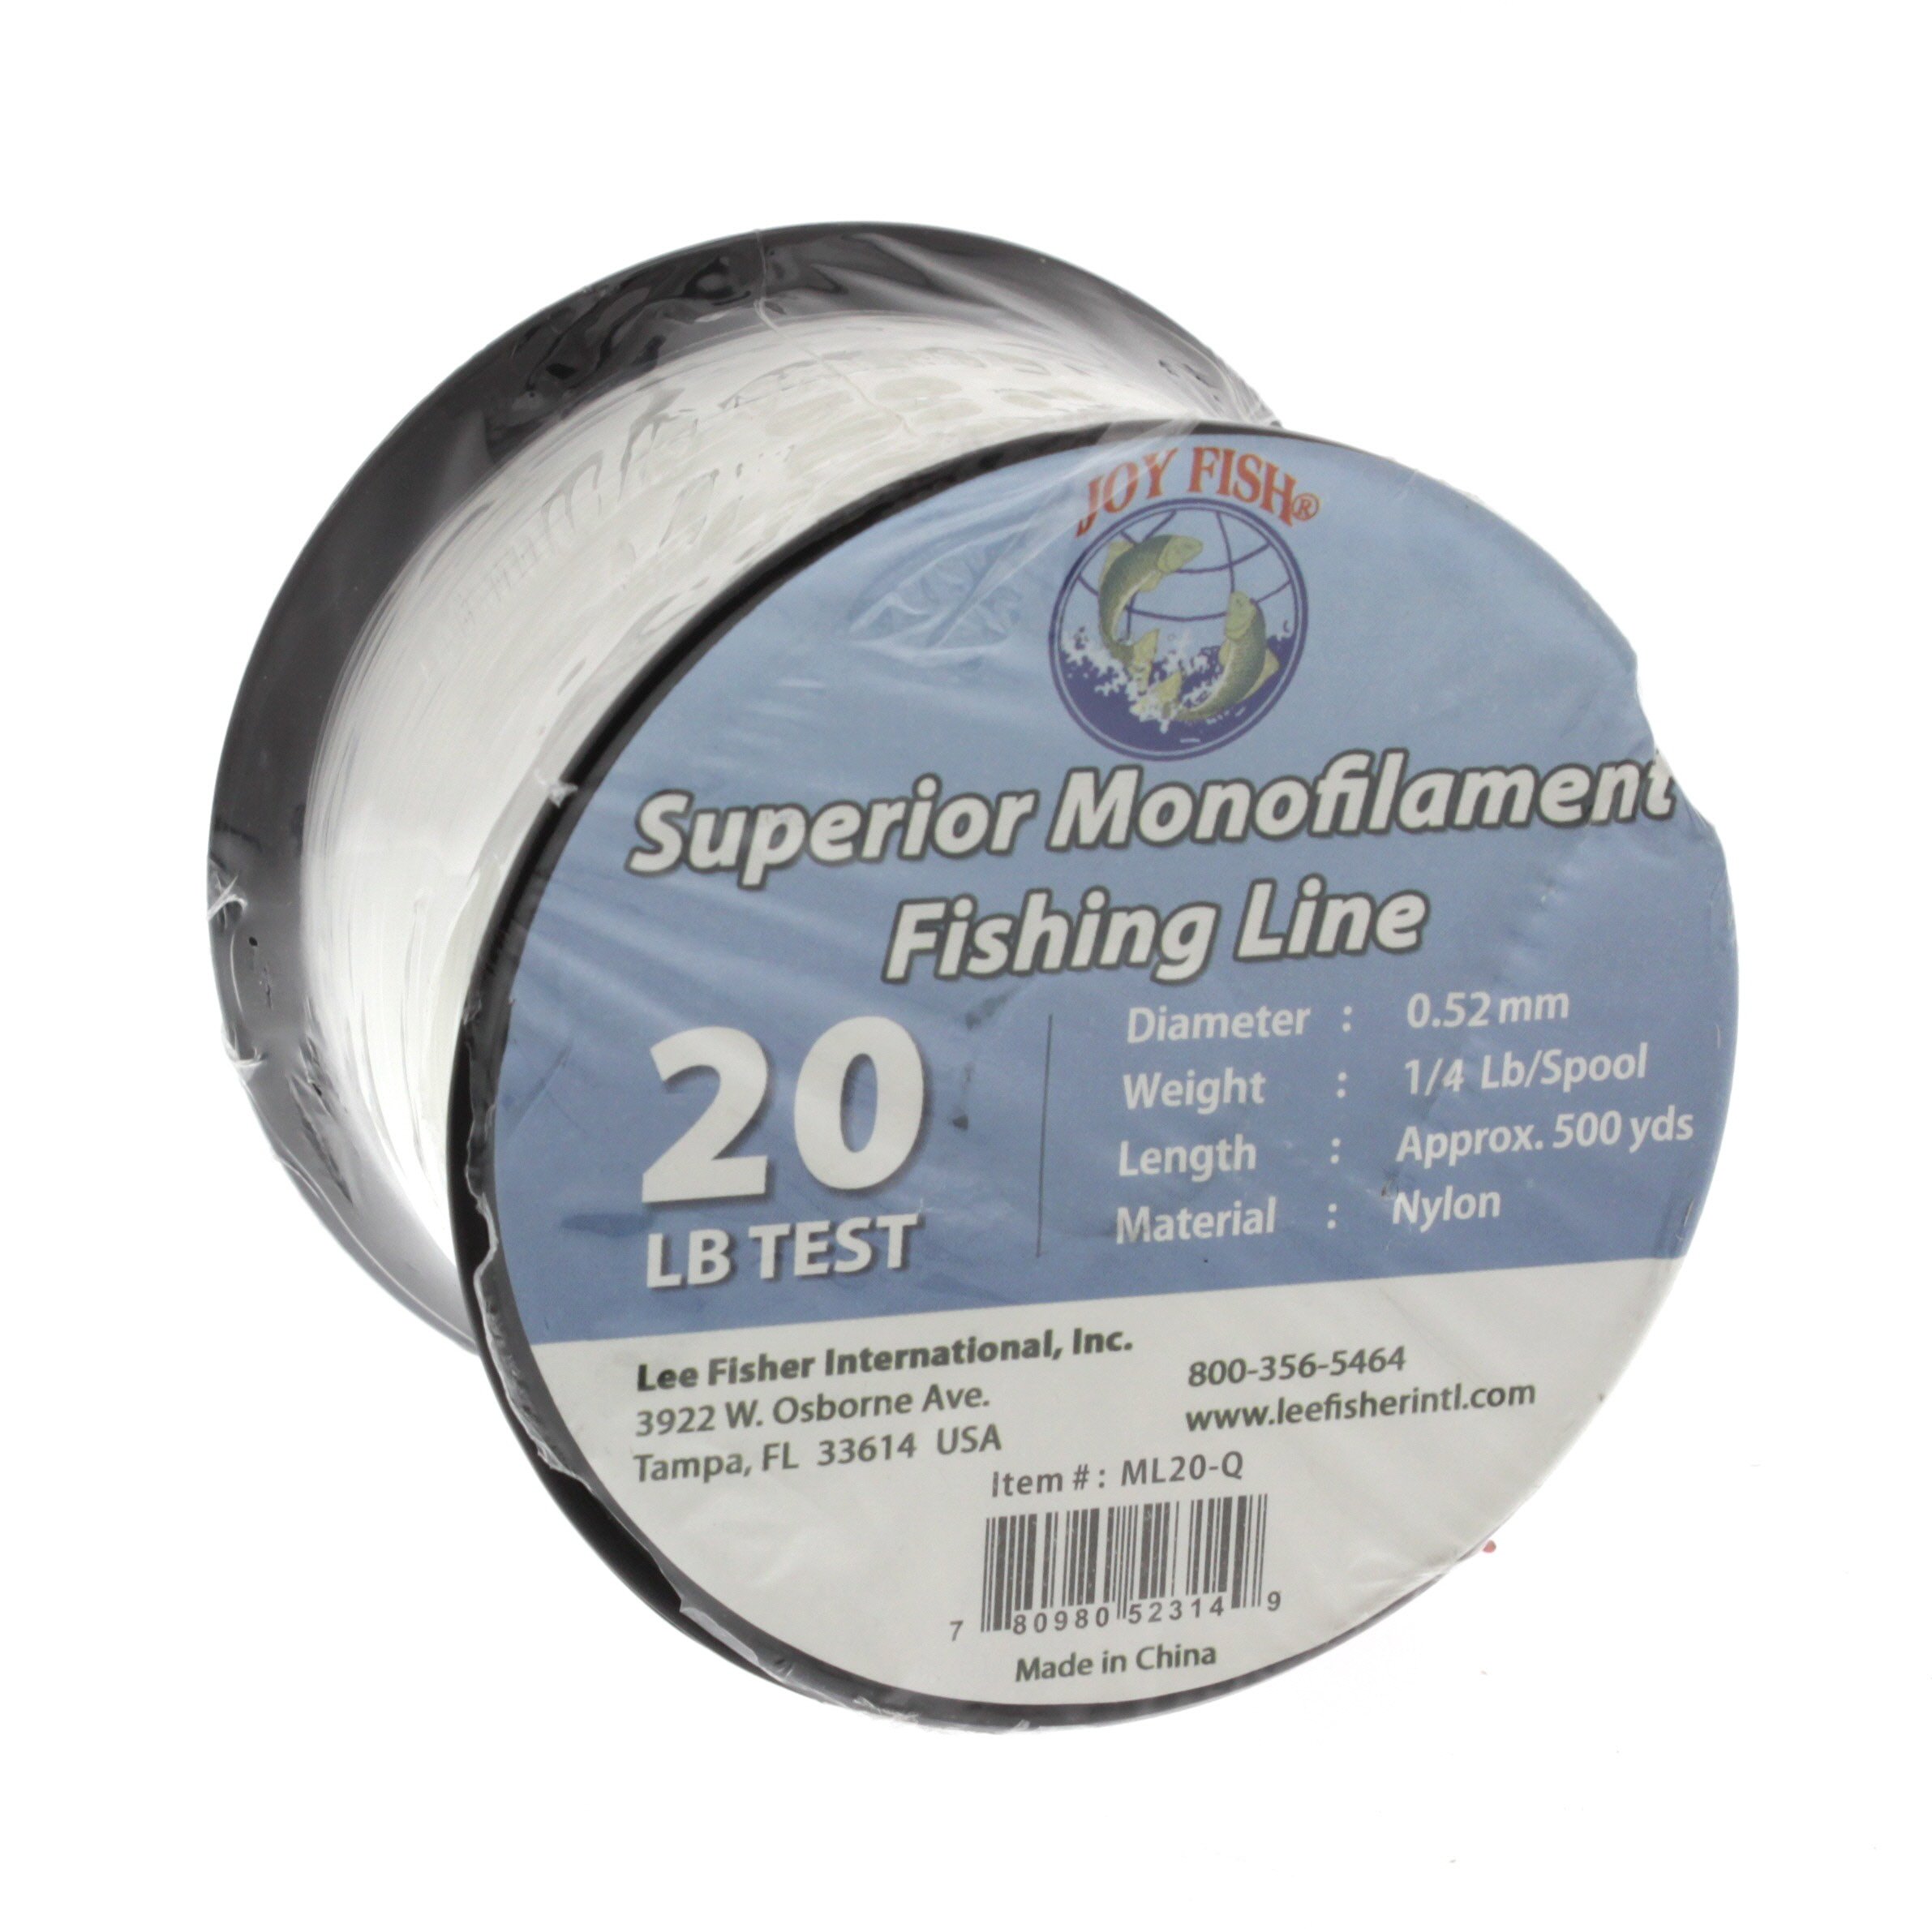 Joy Fish Monofilament Fishing Line 50kg test1.2 mm1800 yards50kg